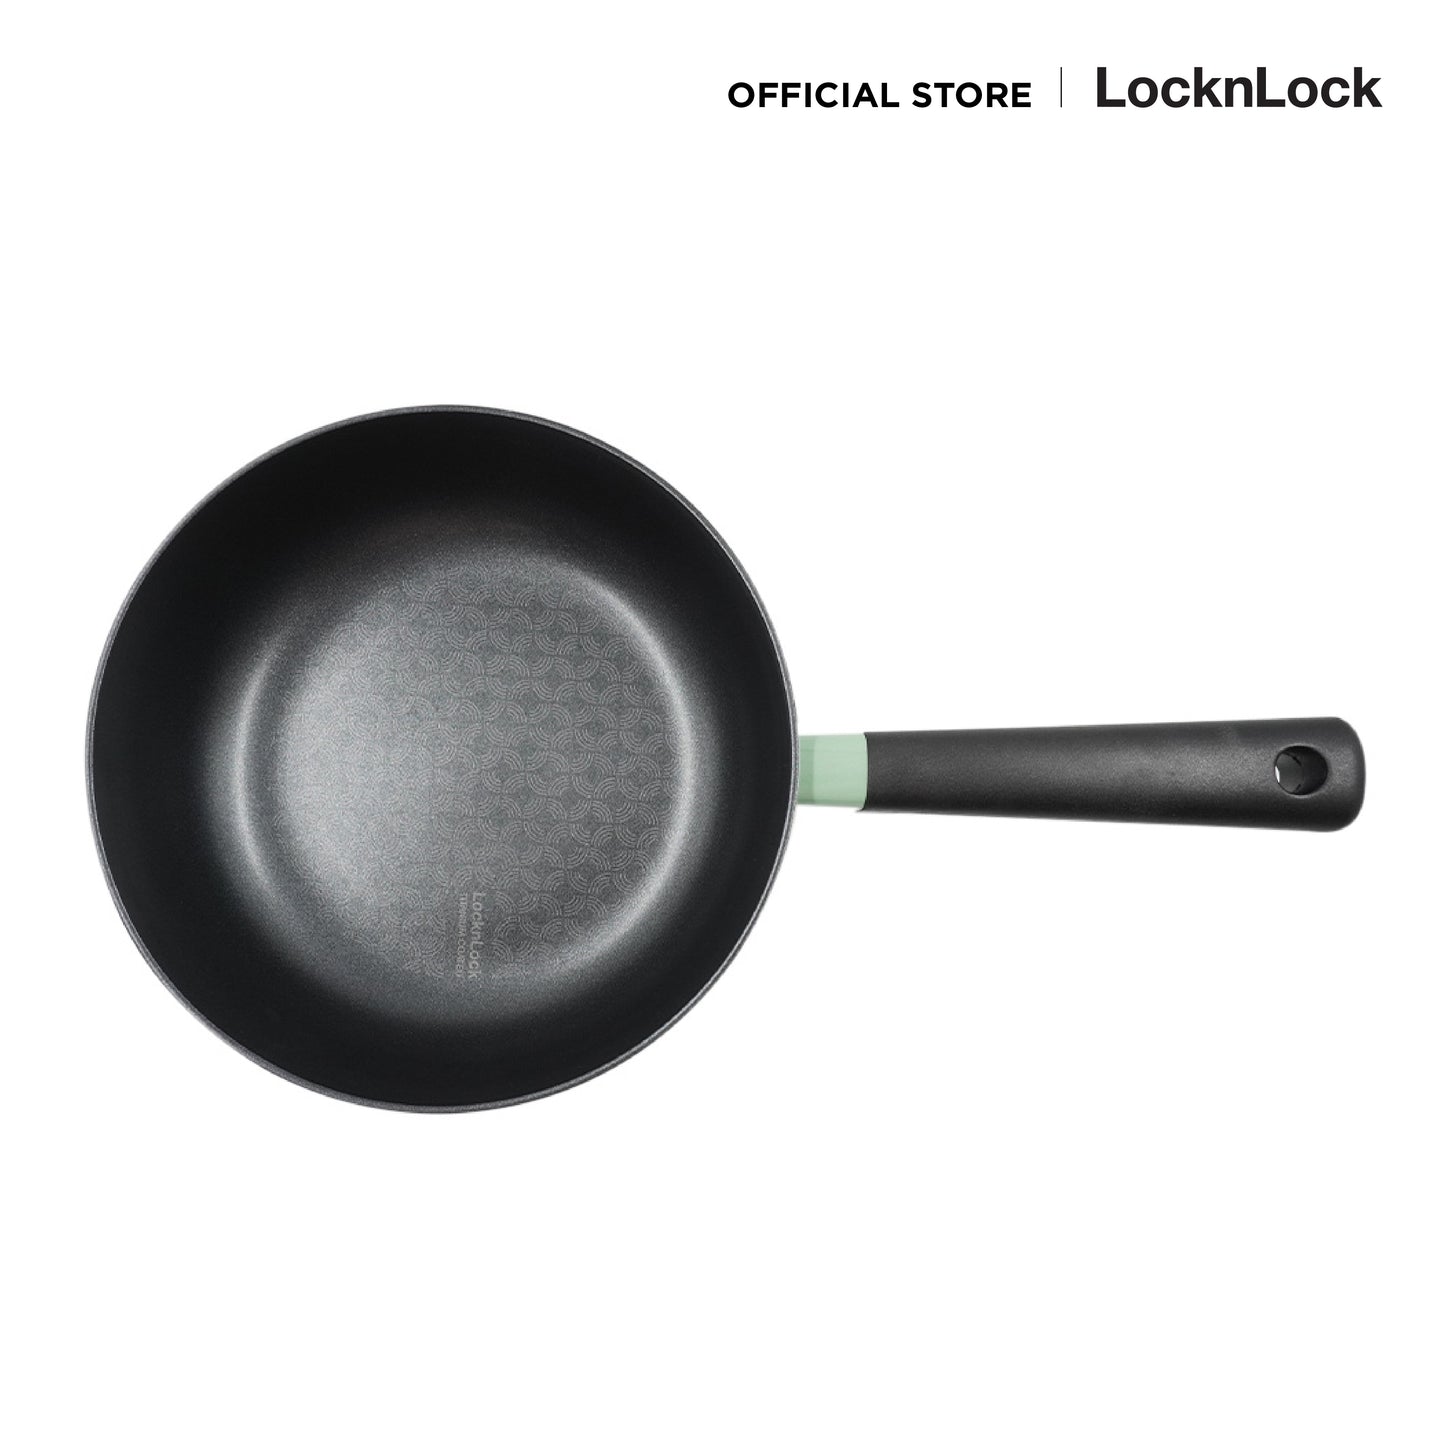 LocknLock Decore Fry Pan 24 cm. - LDE1245IH